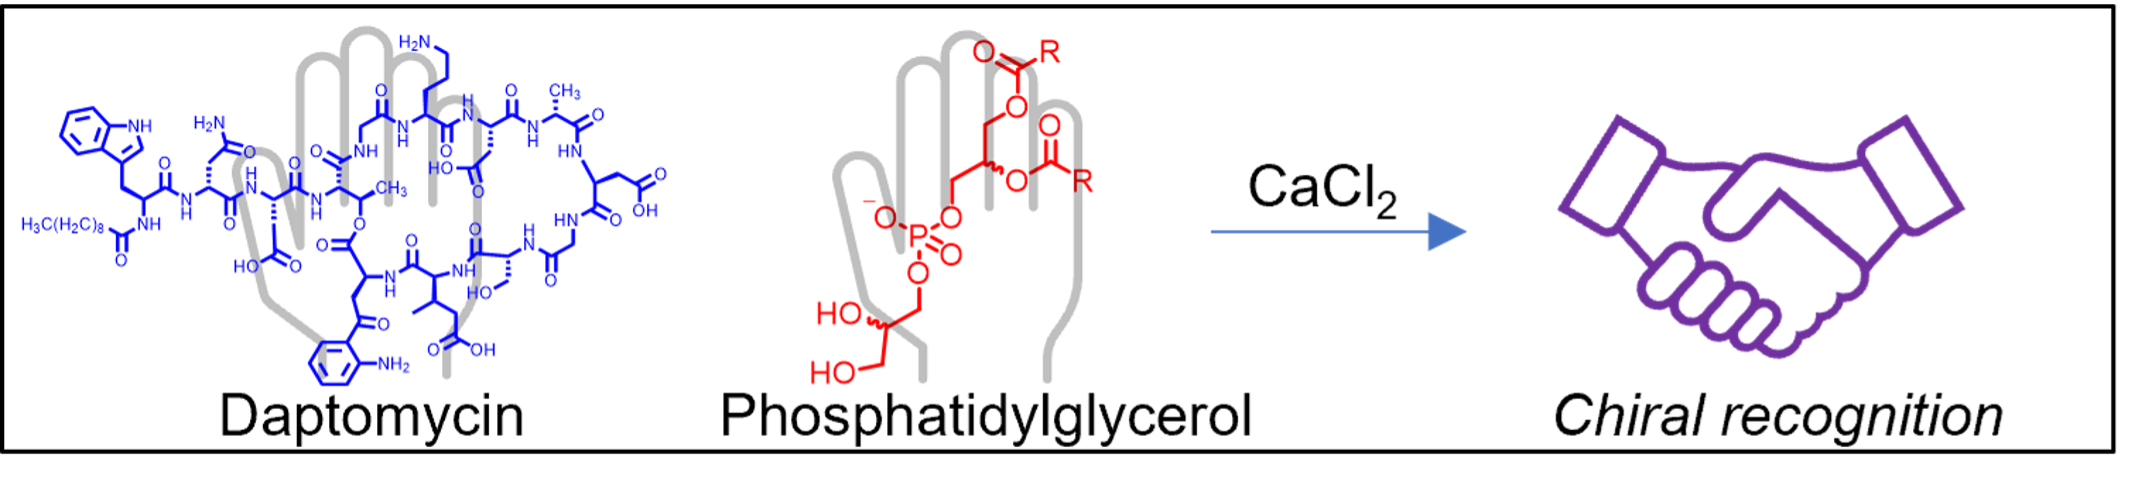 Daptomycin’s Chiral Target is a Stereoisomer of Phosphatidylglycerol